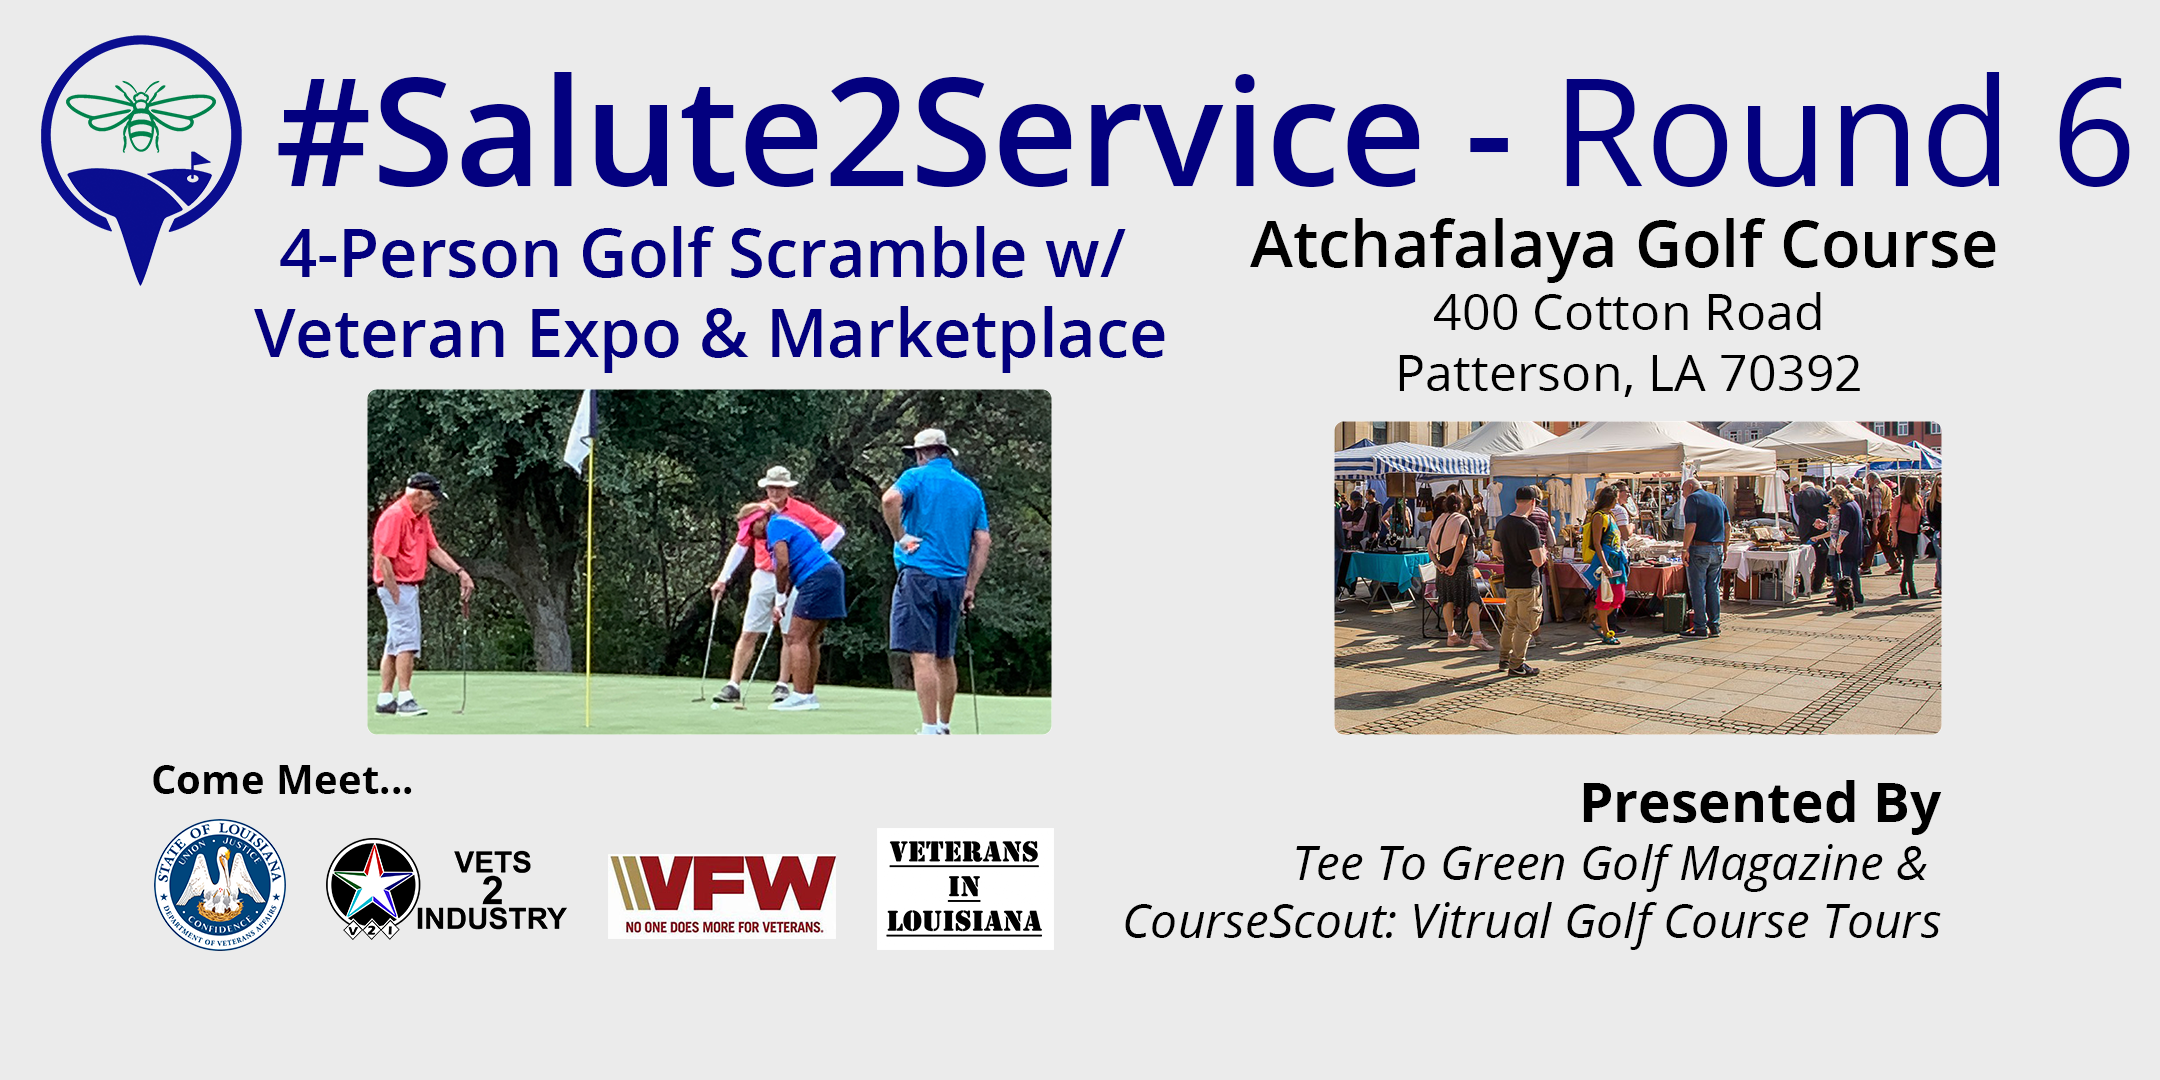 #Salute2Service | Golf Scramble w/ Veteran Expo & Marketplace - Round 6